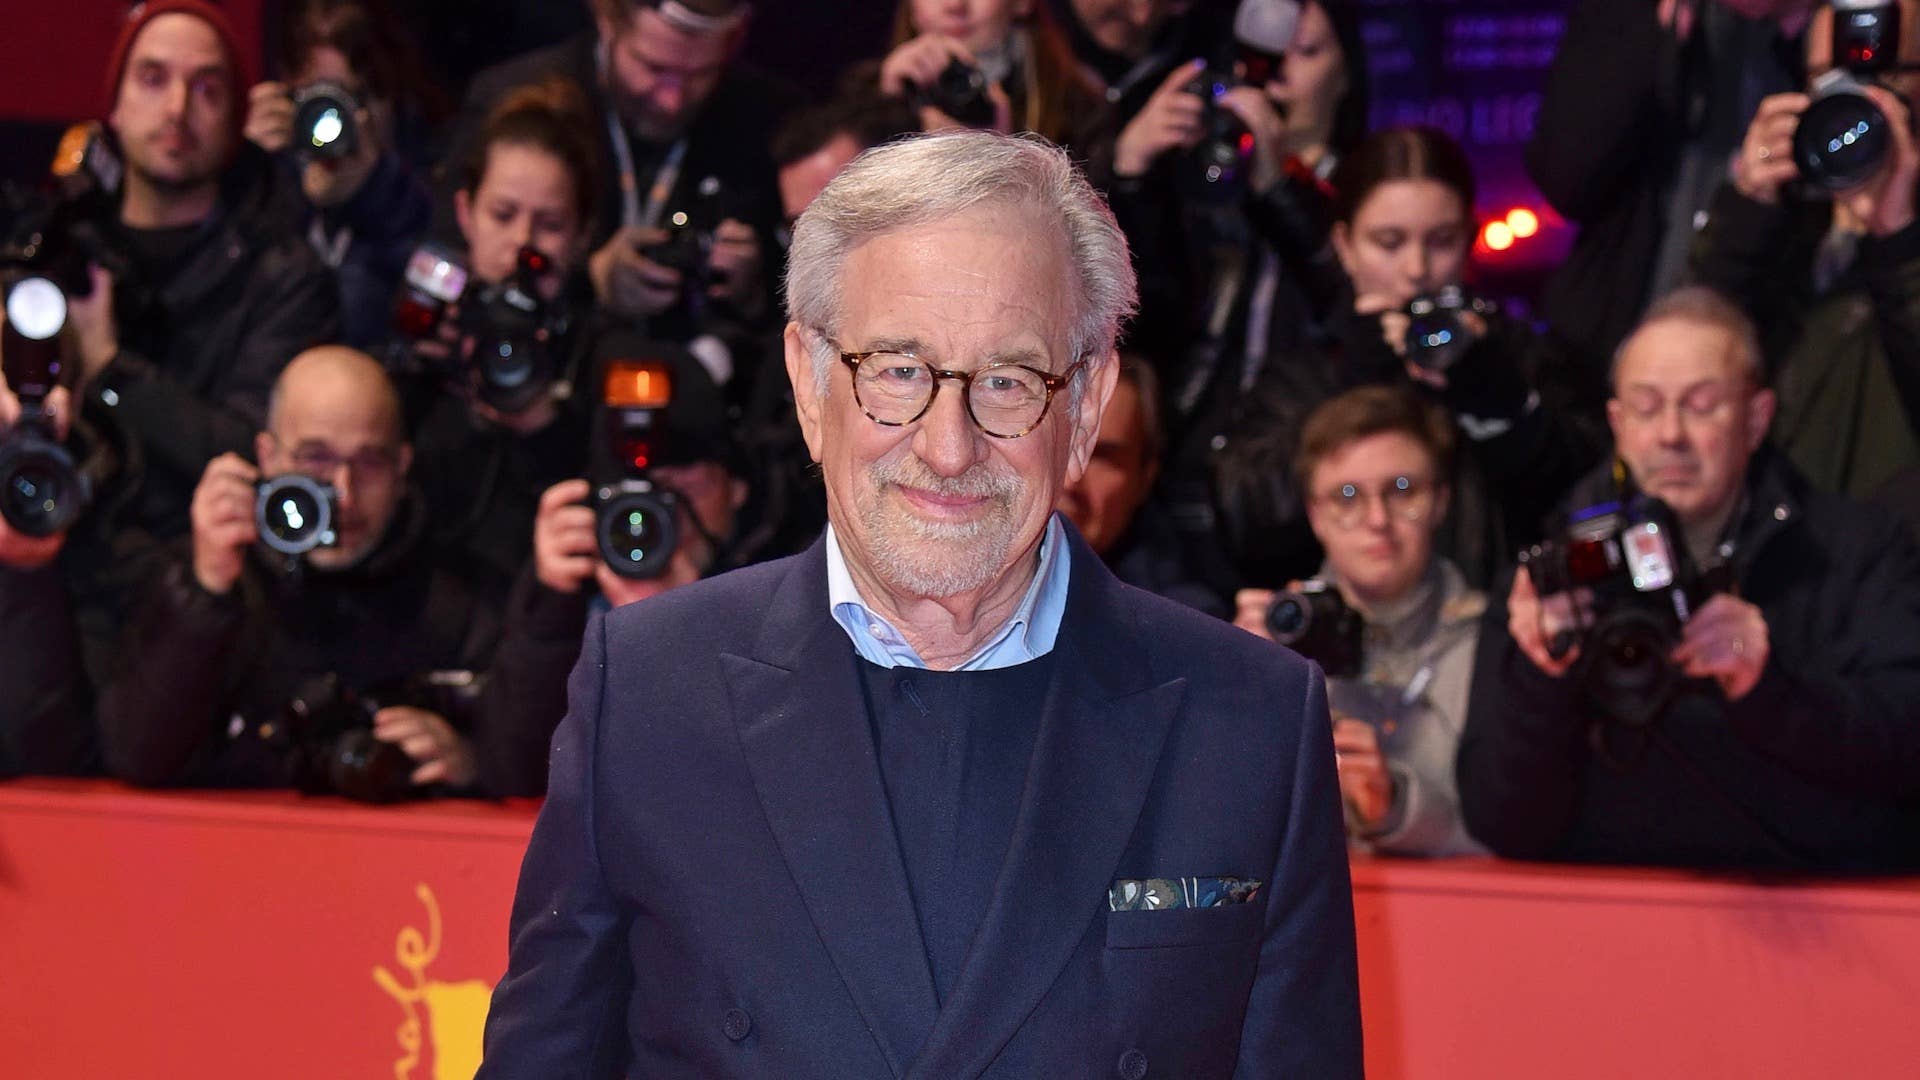 Director Steven Spielberg attends the "The Fabelmans" premiere